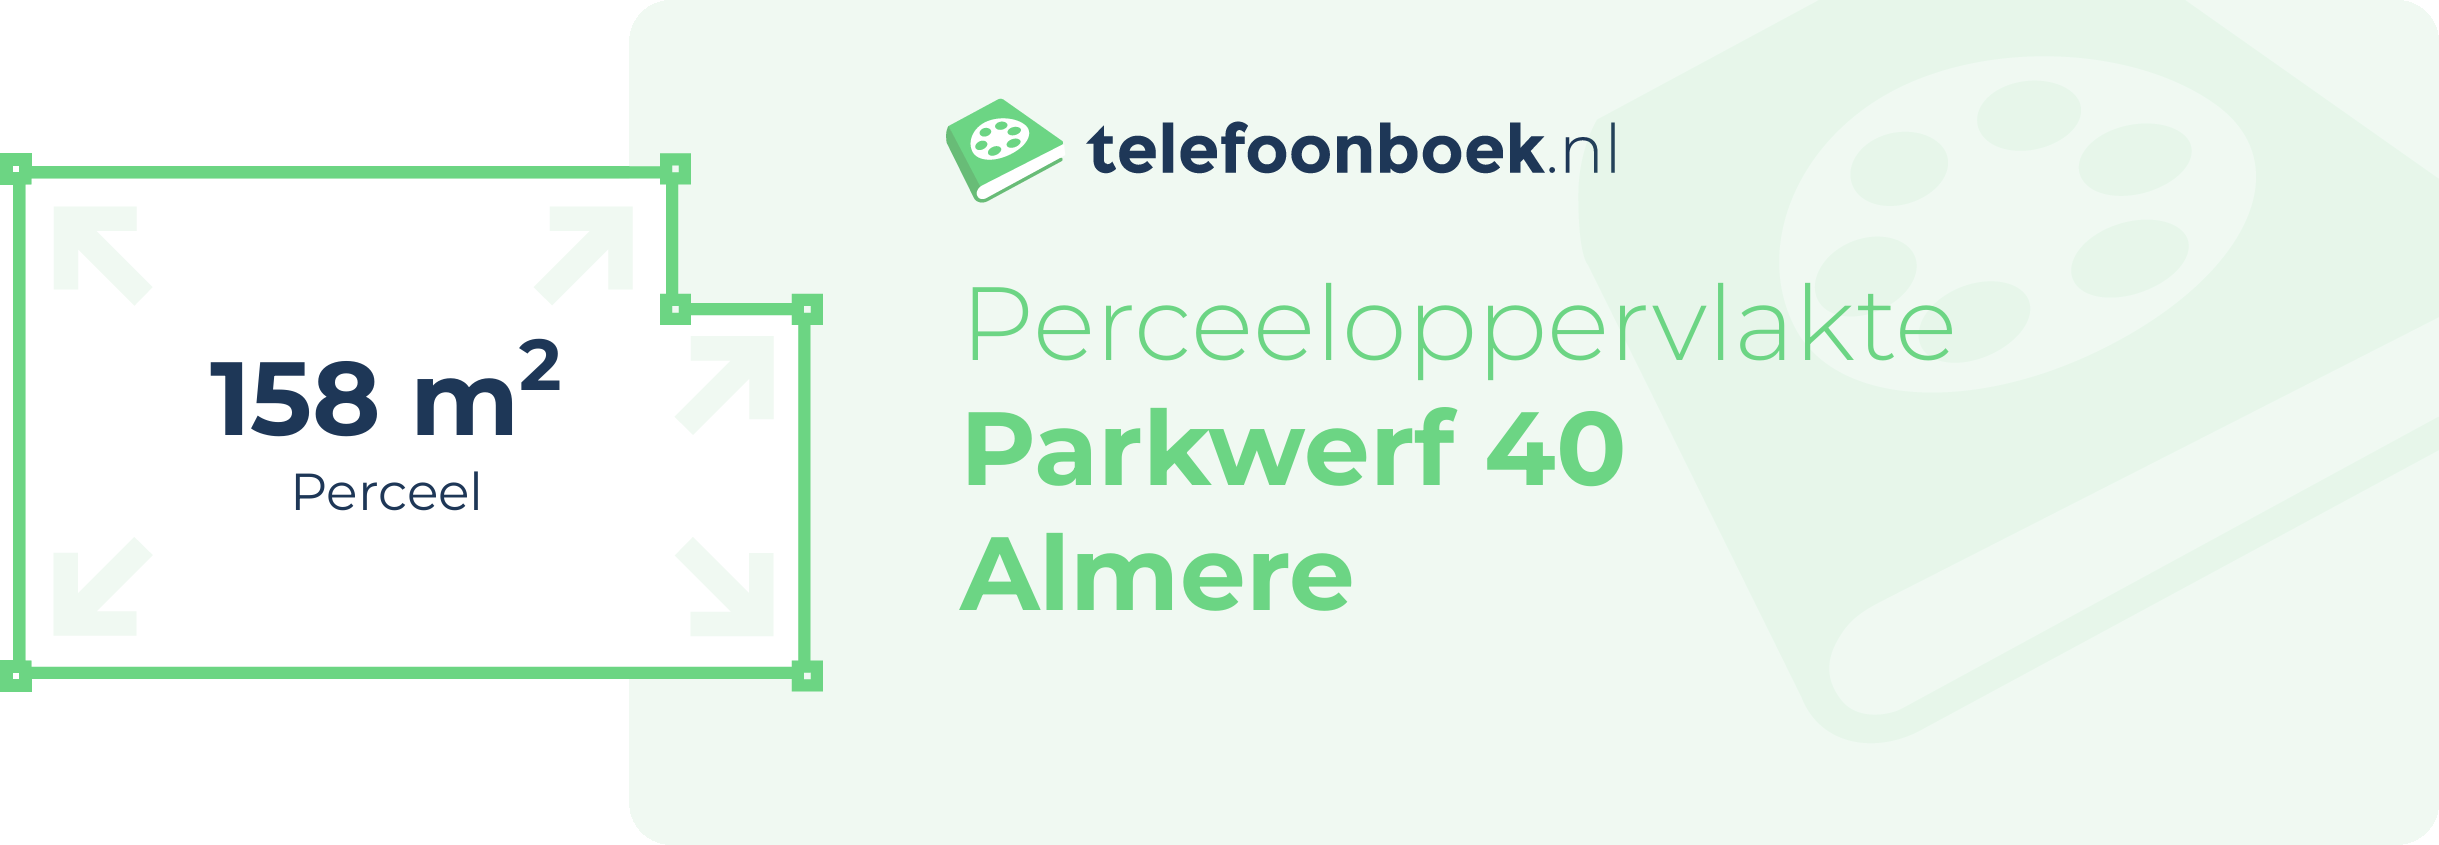 Perceeloppervlakte Parkwerf 40 Almere